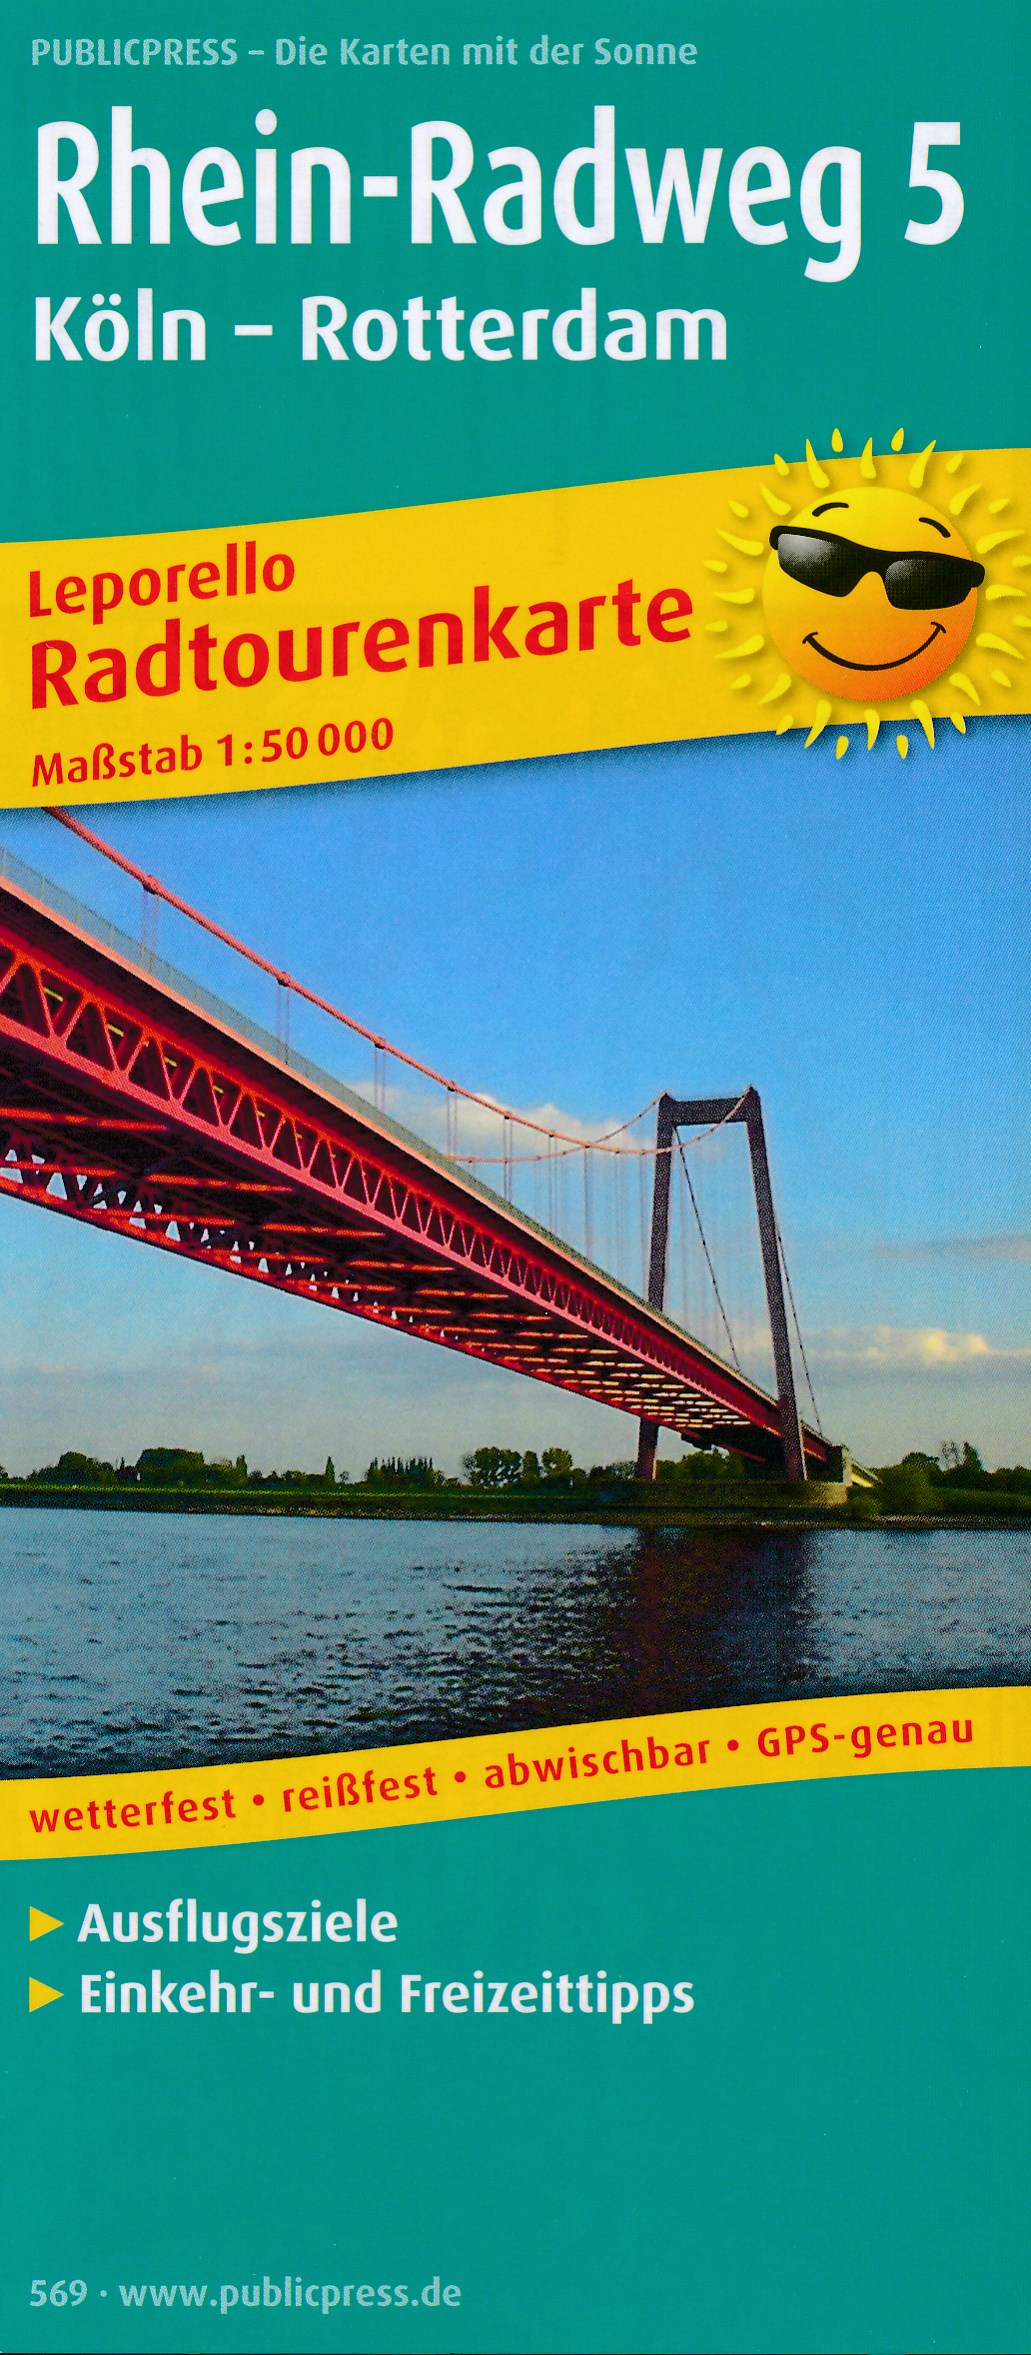 Online bestellen: Fietskaart Rhein Radweg 5 | Publicpress